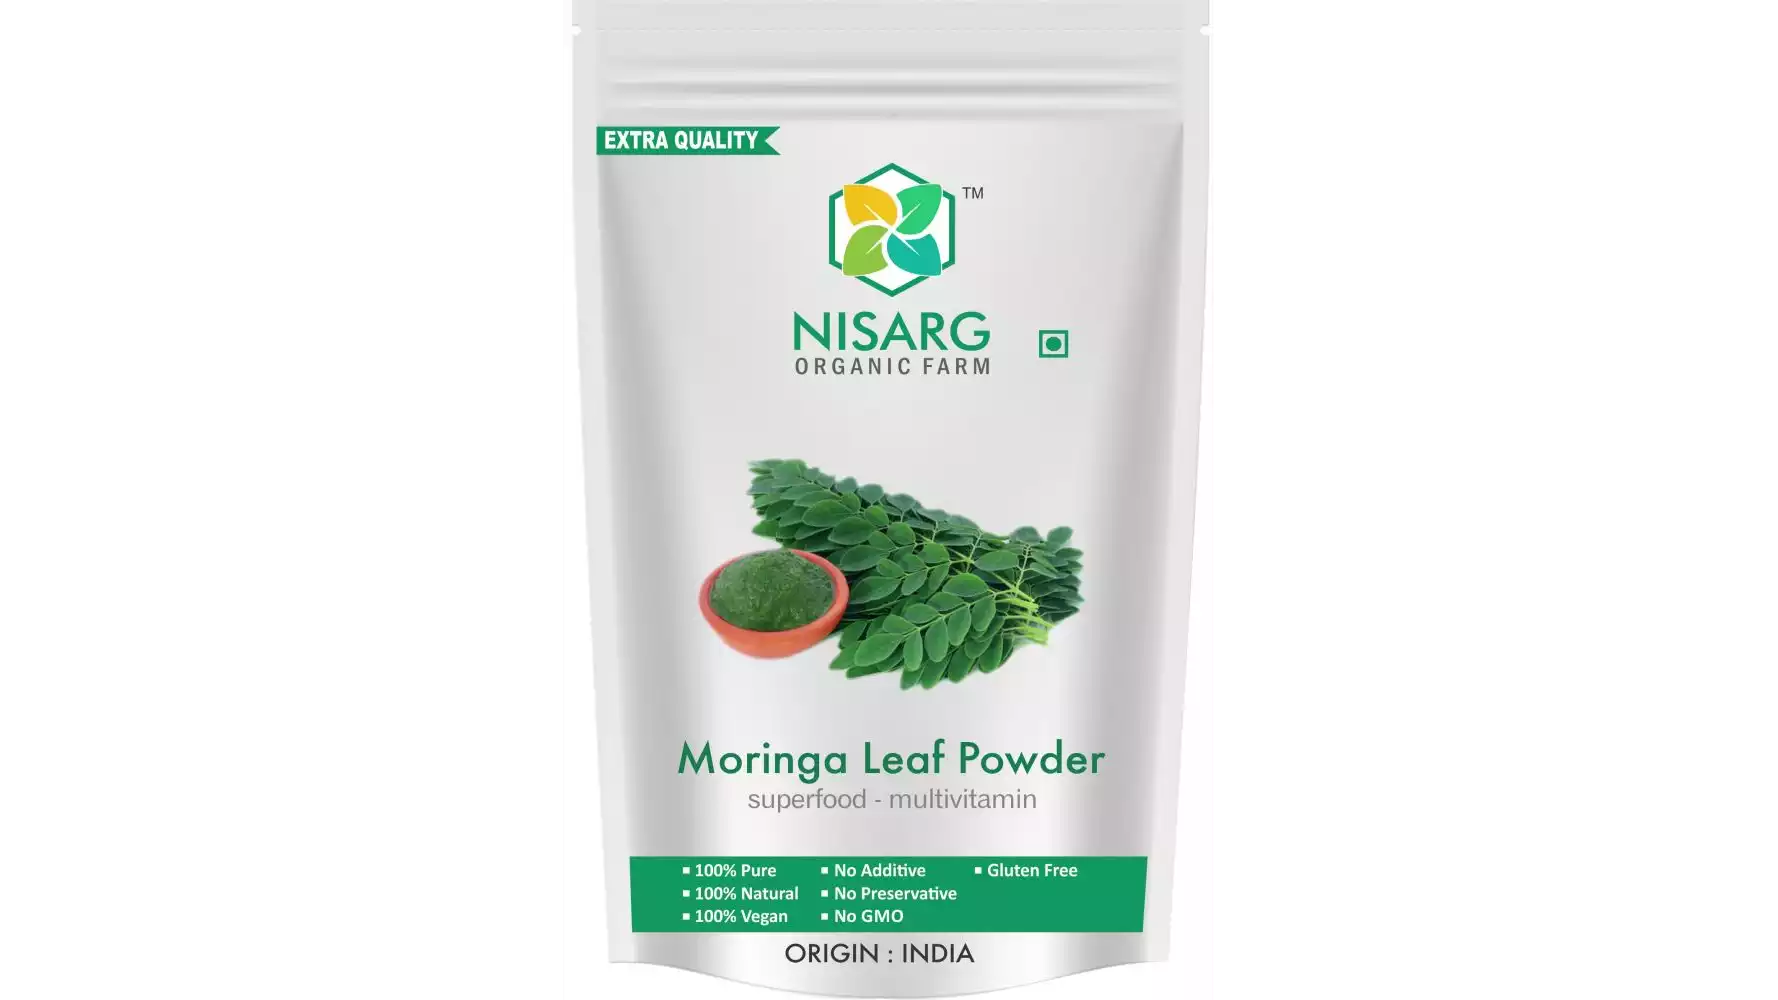 Nisarg Organic Farm Moringa Leaf Powder (500g)